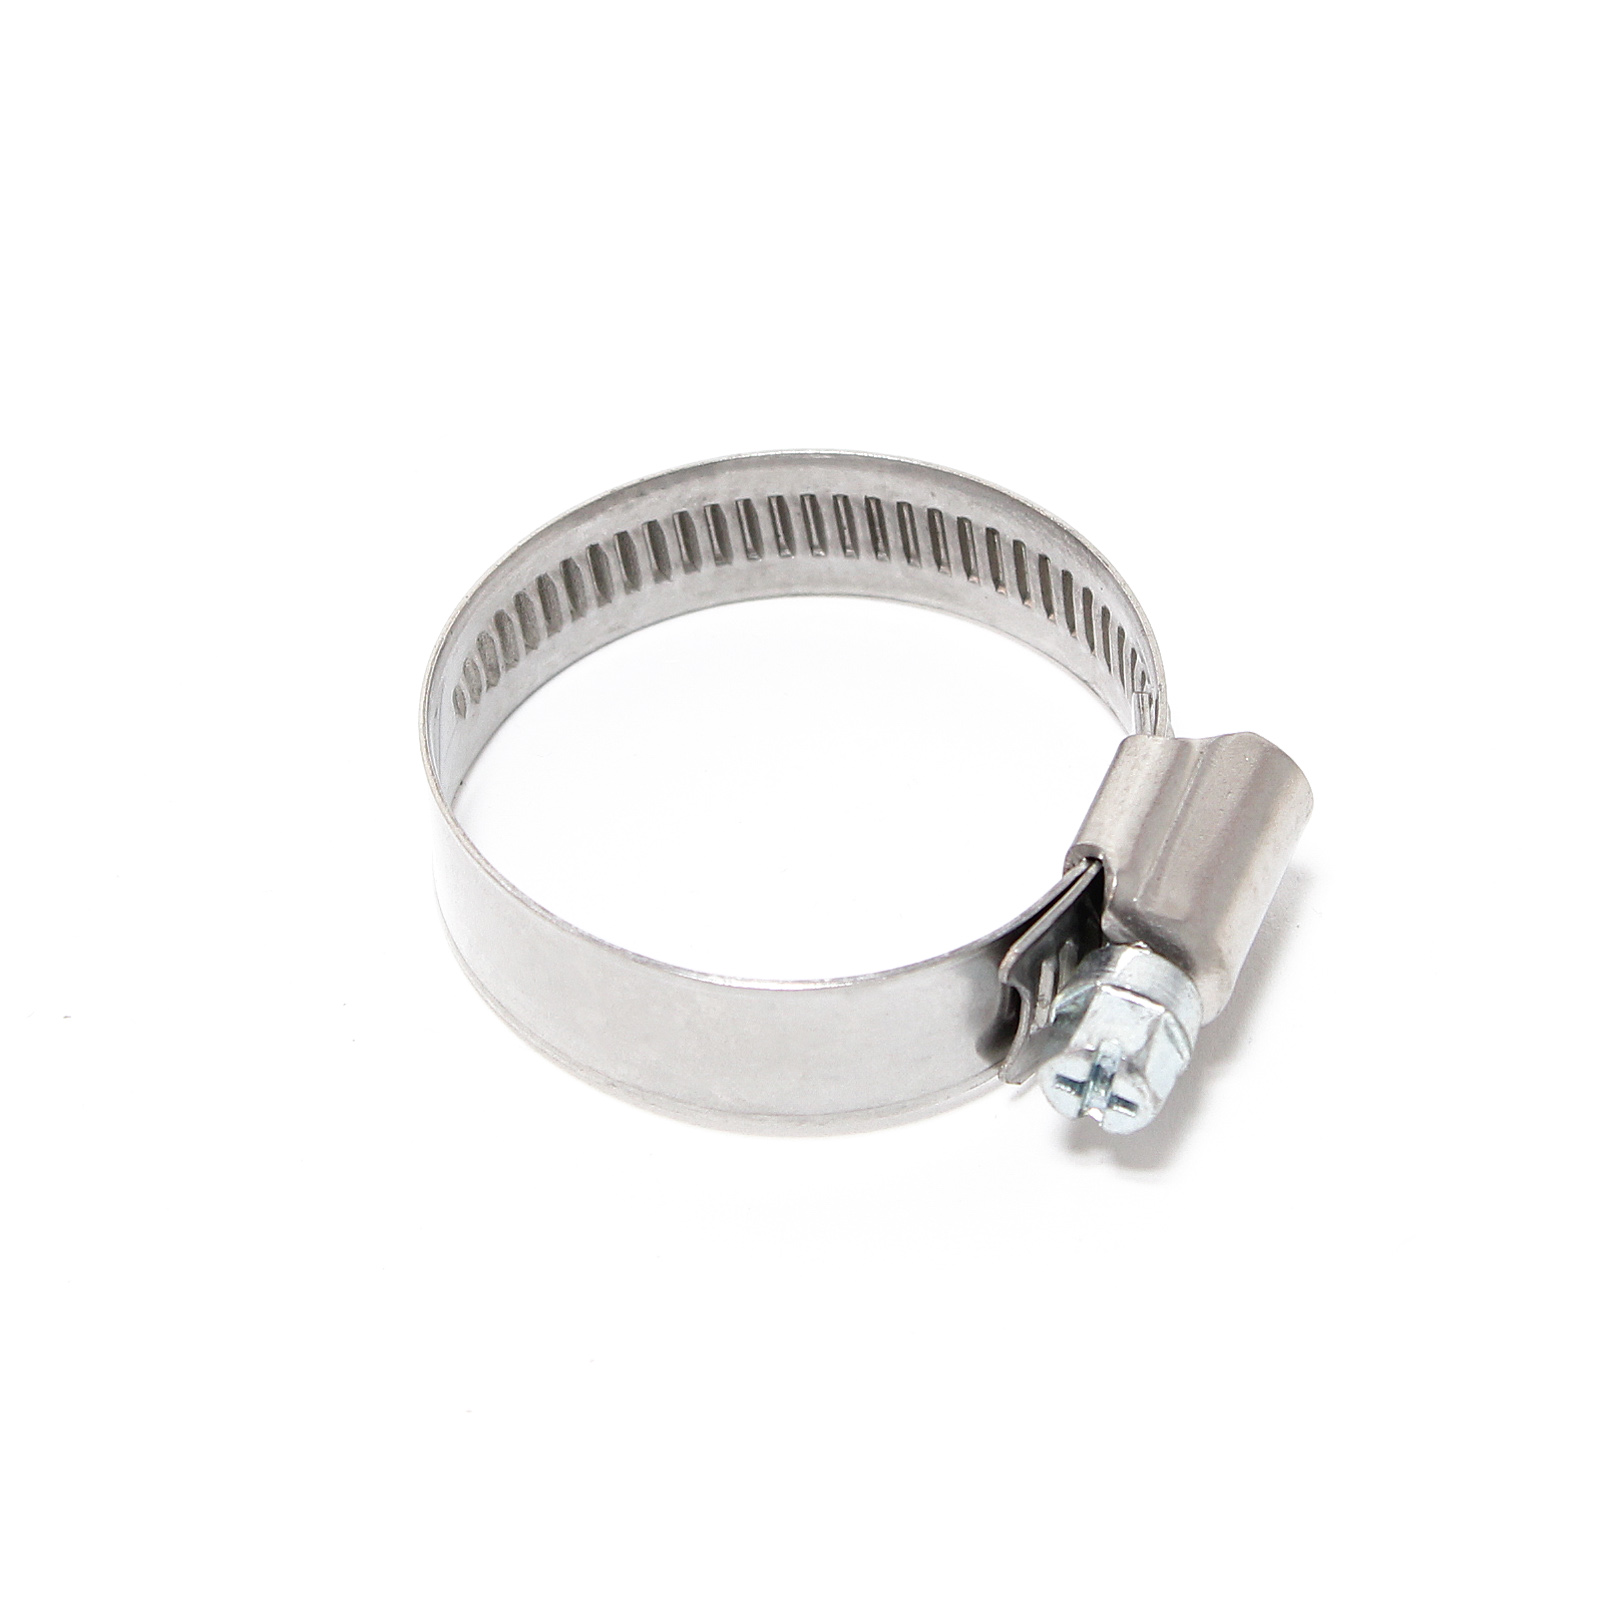 La crémaillère collier de serrage W5 inox 12mm 160-180 mm 